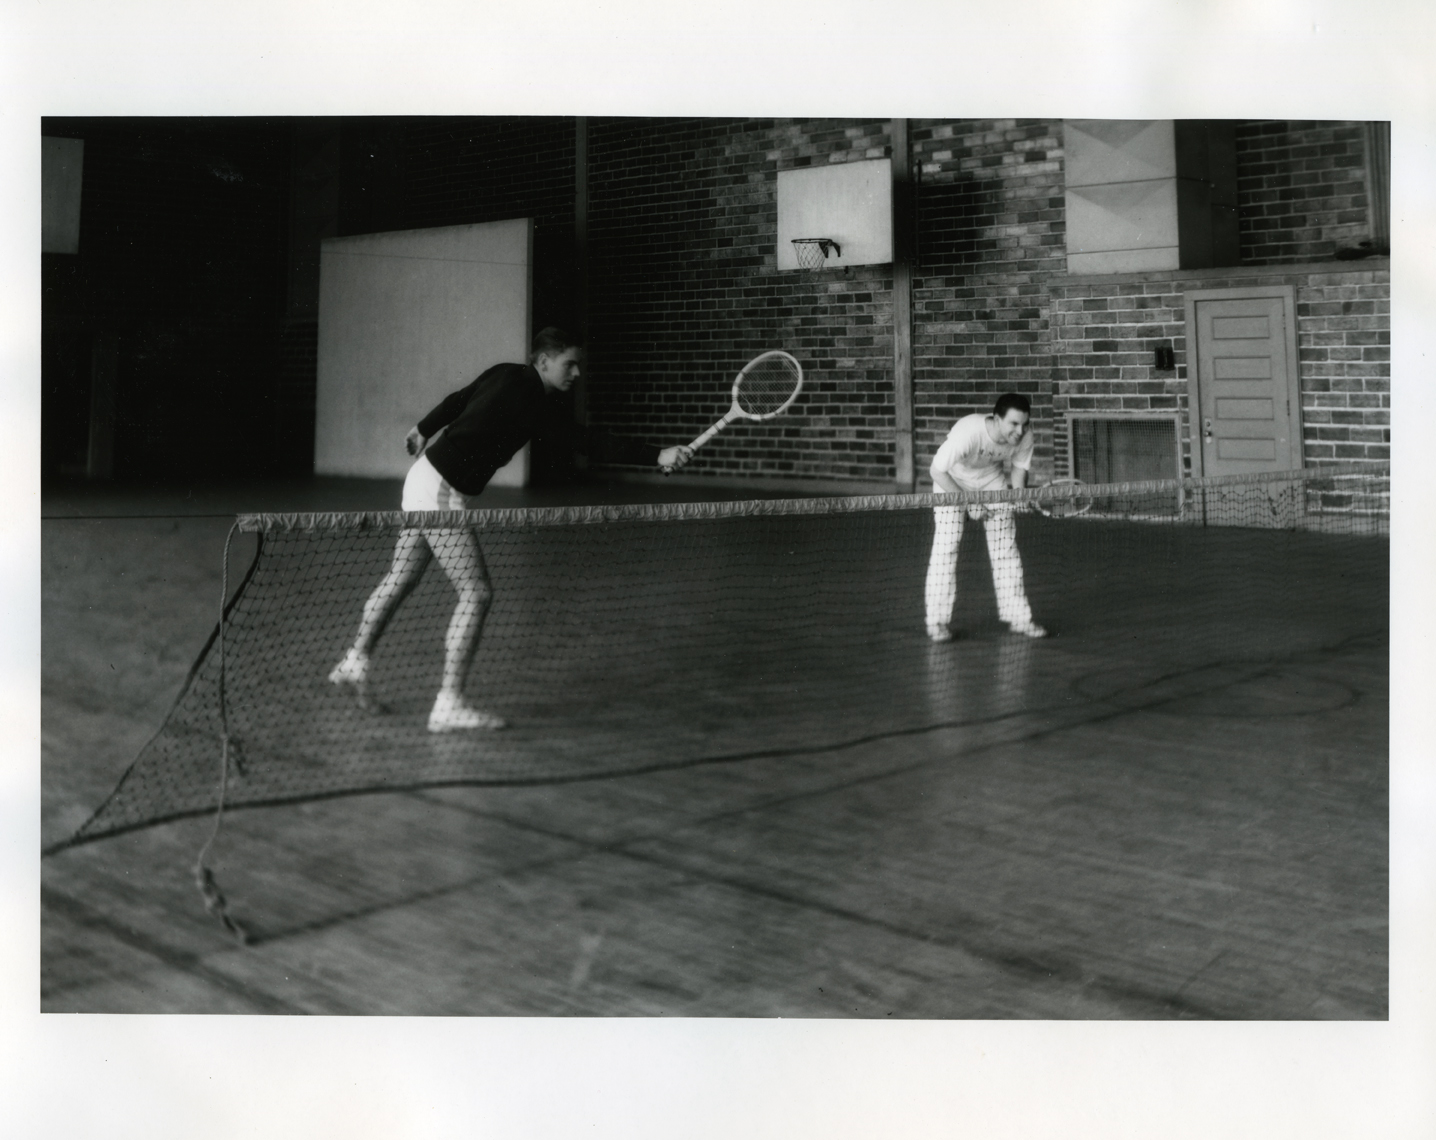 Men playing tennis, March 1936